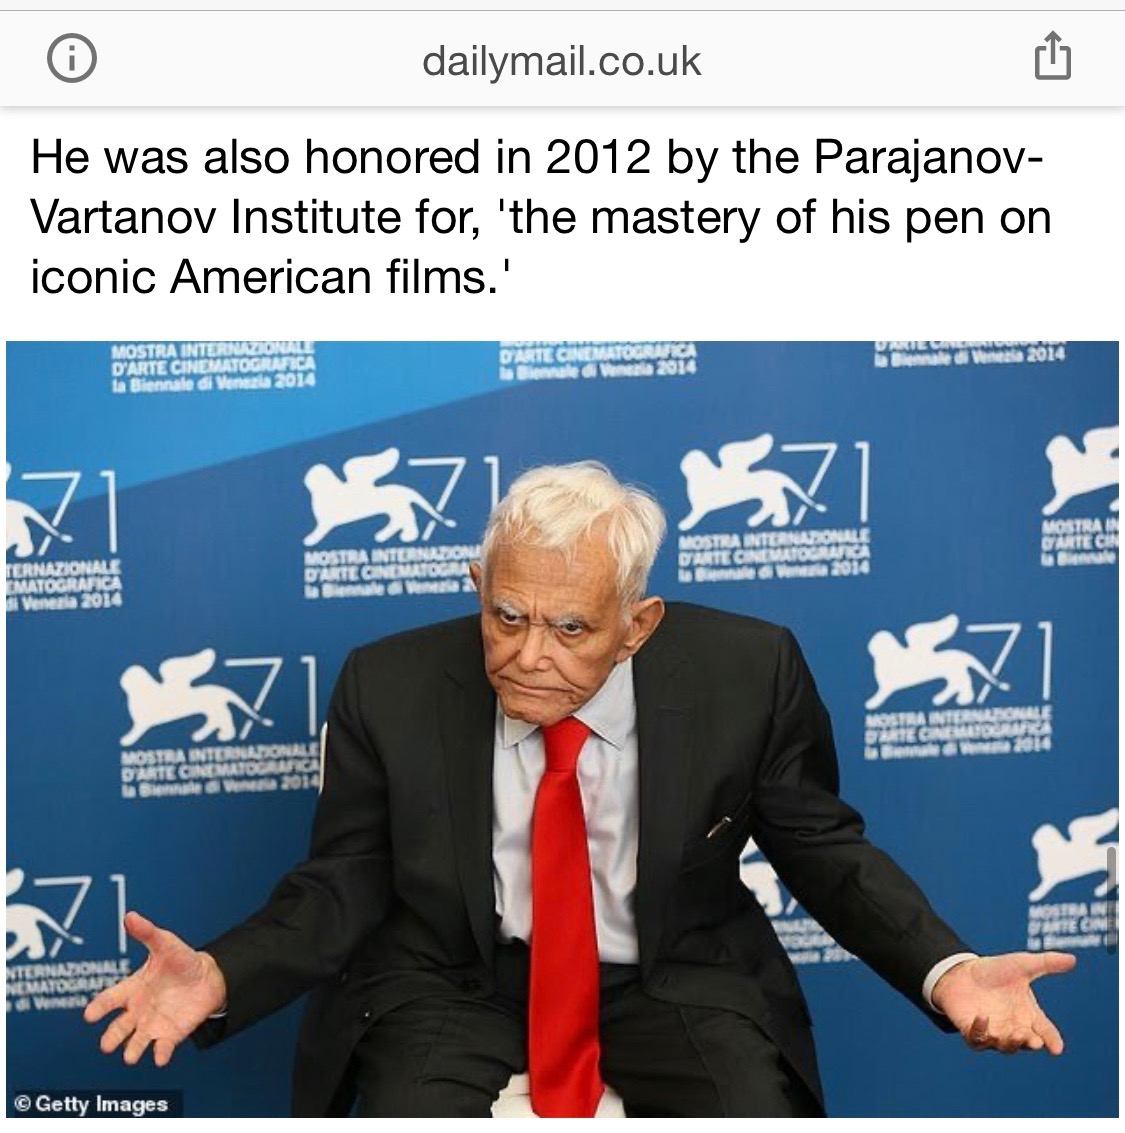 Daily Mail_Mardik Martin_Parajanov-Vartanov Institute Award